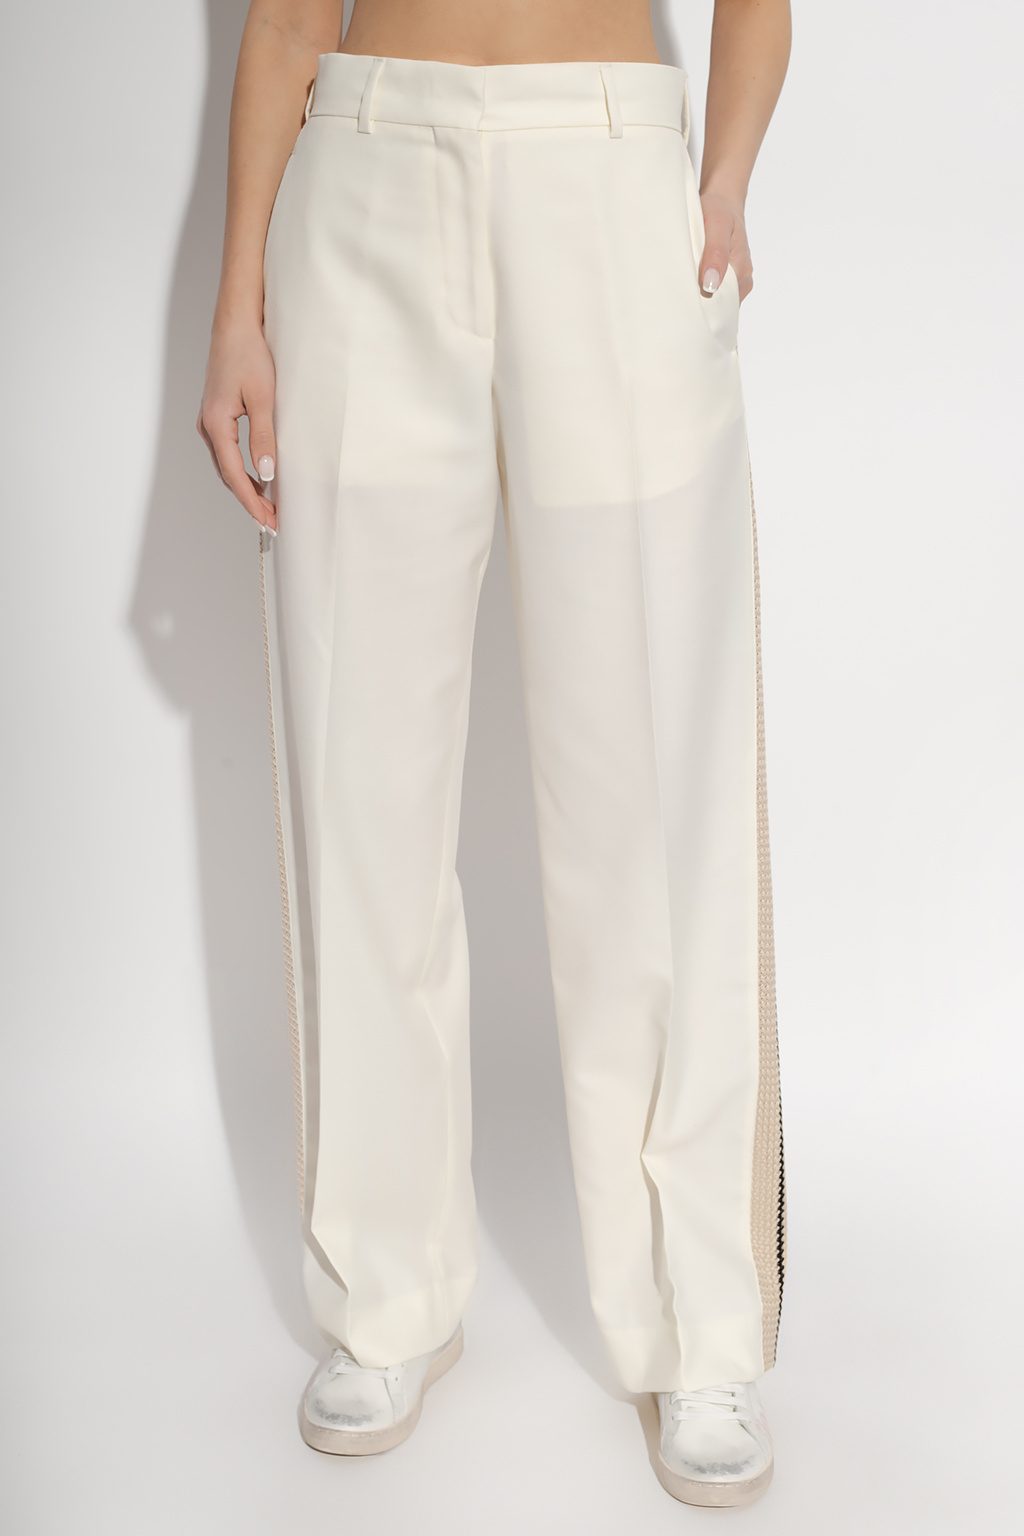 Palm Angels Wool-blend Skinny trousers